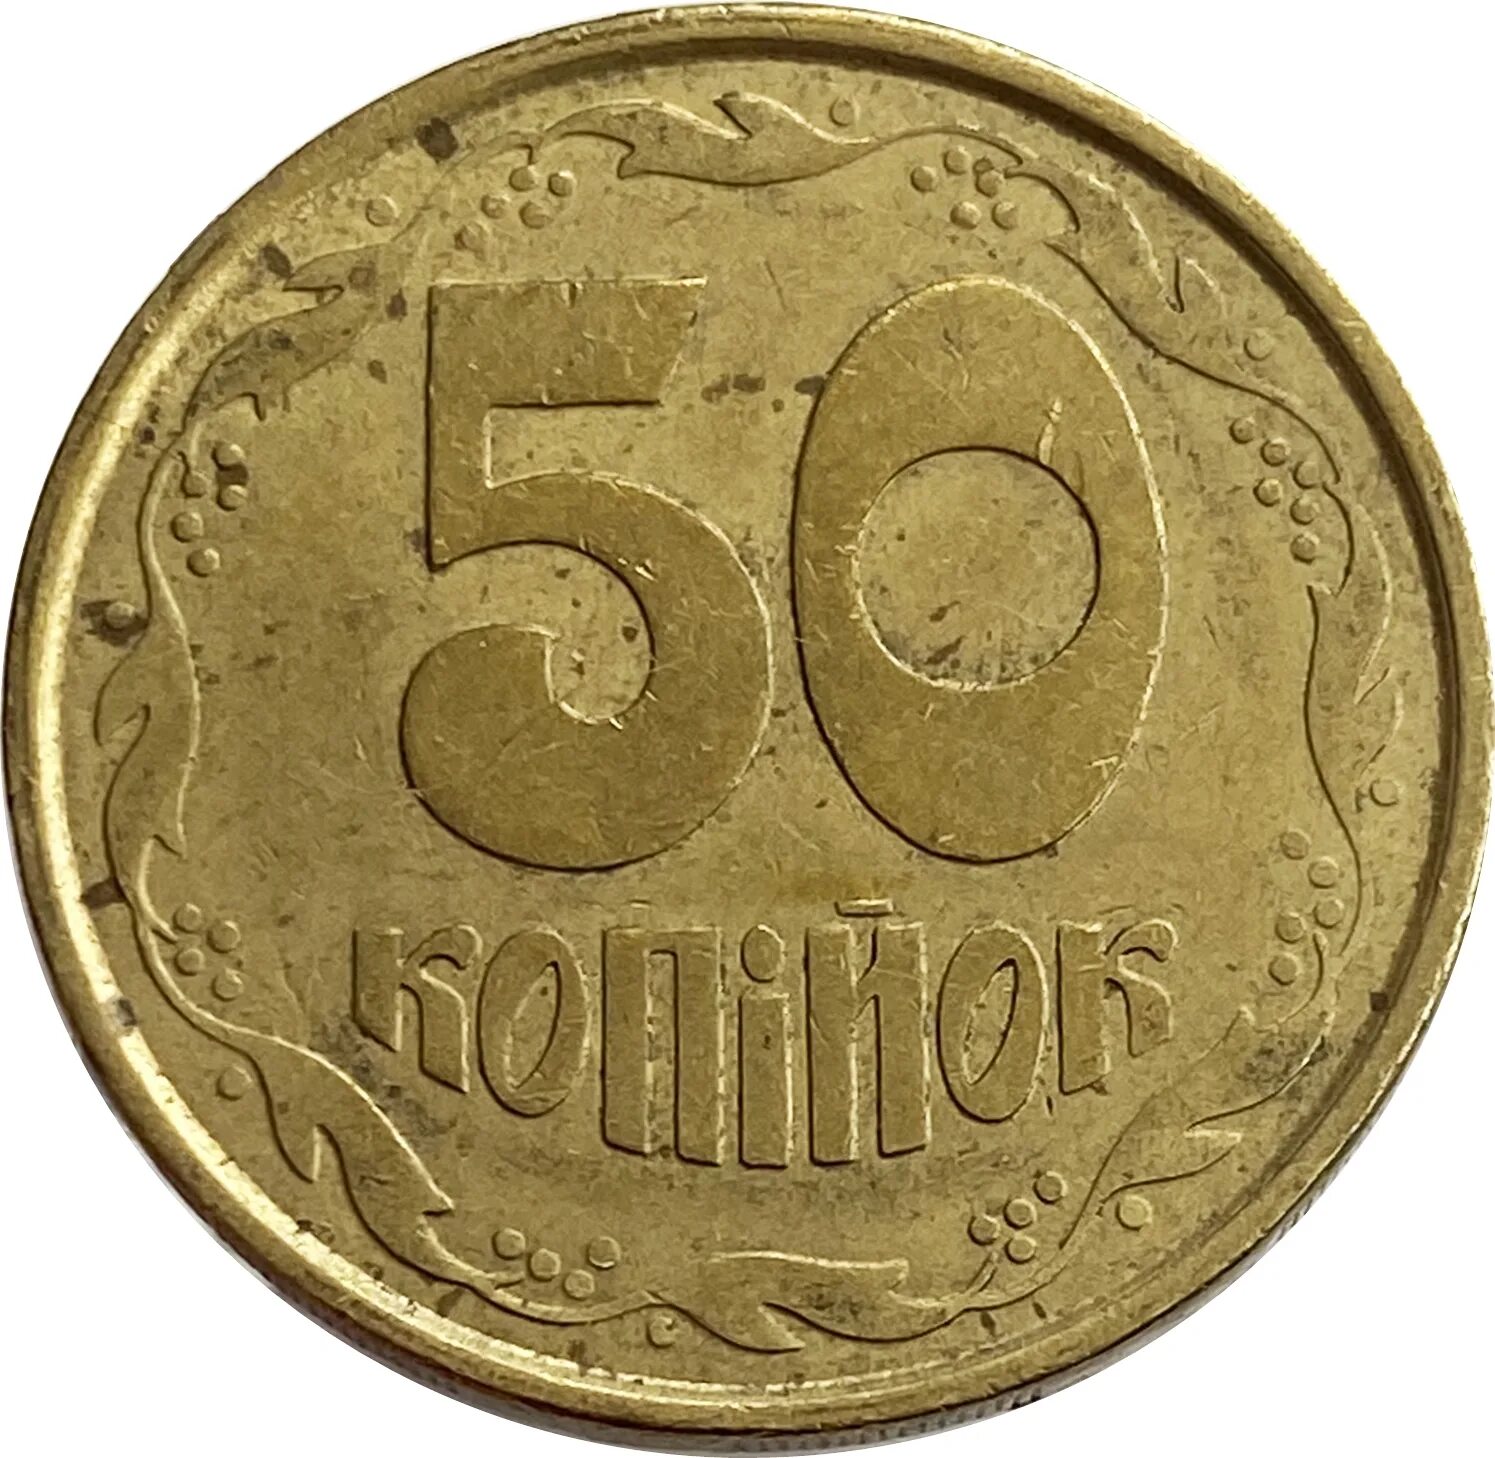 50 Копеек Украина. Монета 50 копеек Украина. Украинская монета 50 копеек 1992 года. 50 Украинских копеек. Покупка 50 копеек